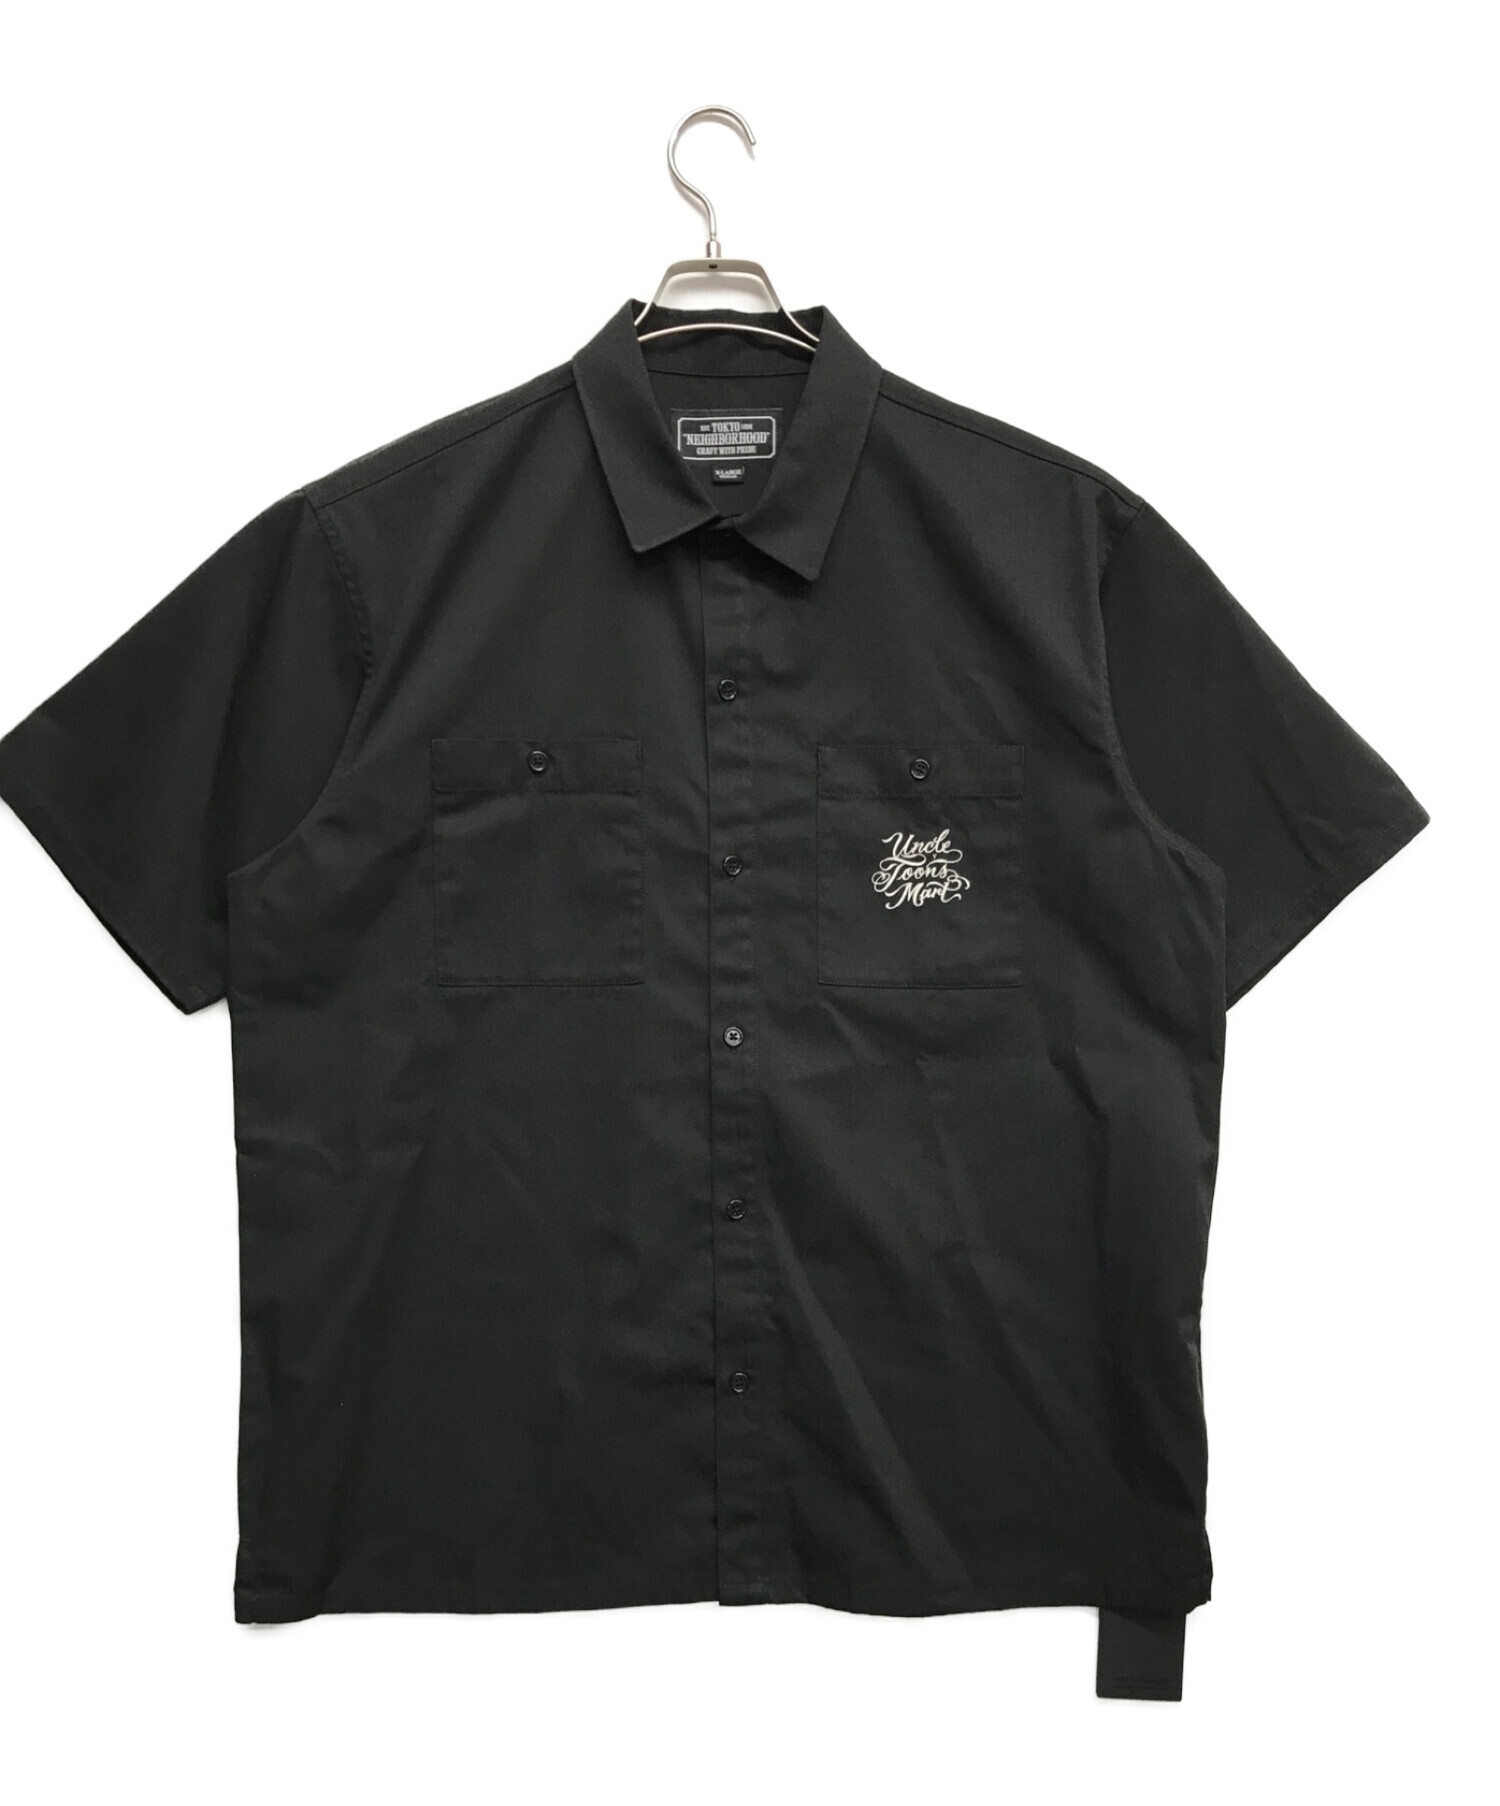 NEIGHBORHOOD (ネイバーフッド) mister cartoon (ミスター カートゥーン) 半袖ワークシャツシャツ ブラック サイズ:XL